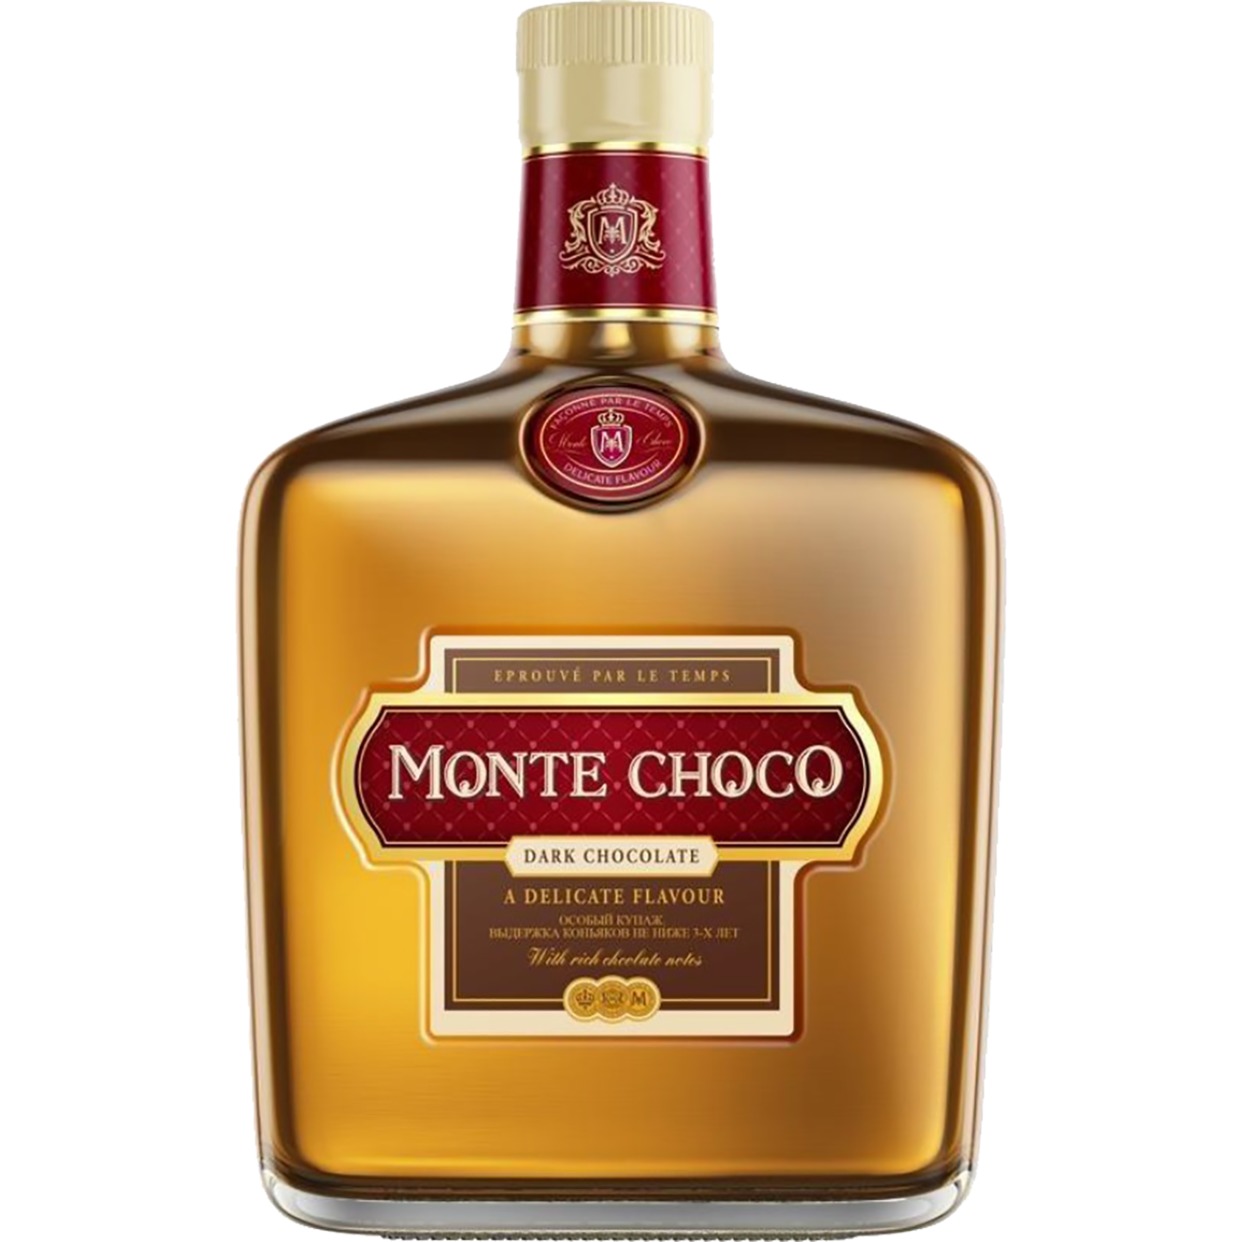 Коктейль Monte Choco Dark Chocolate, 40%, 0,5 л по акции в Пятерочке